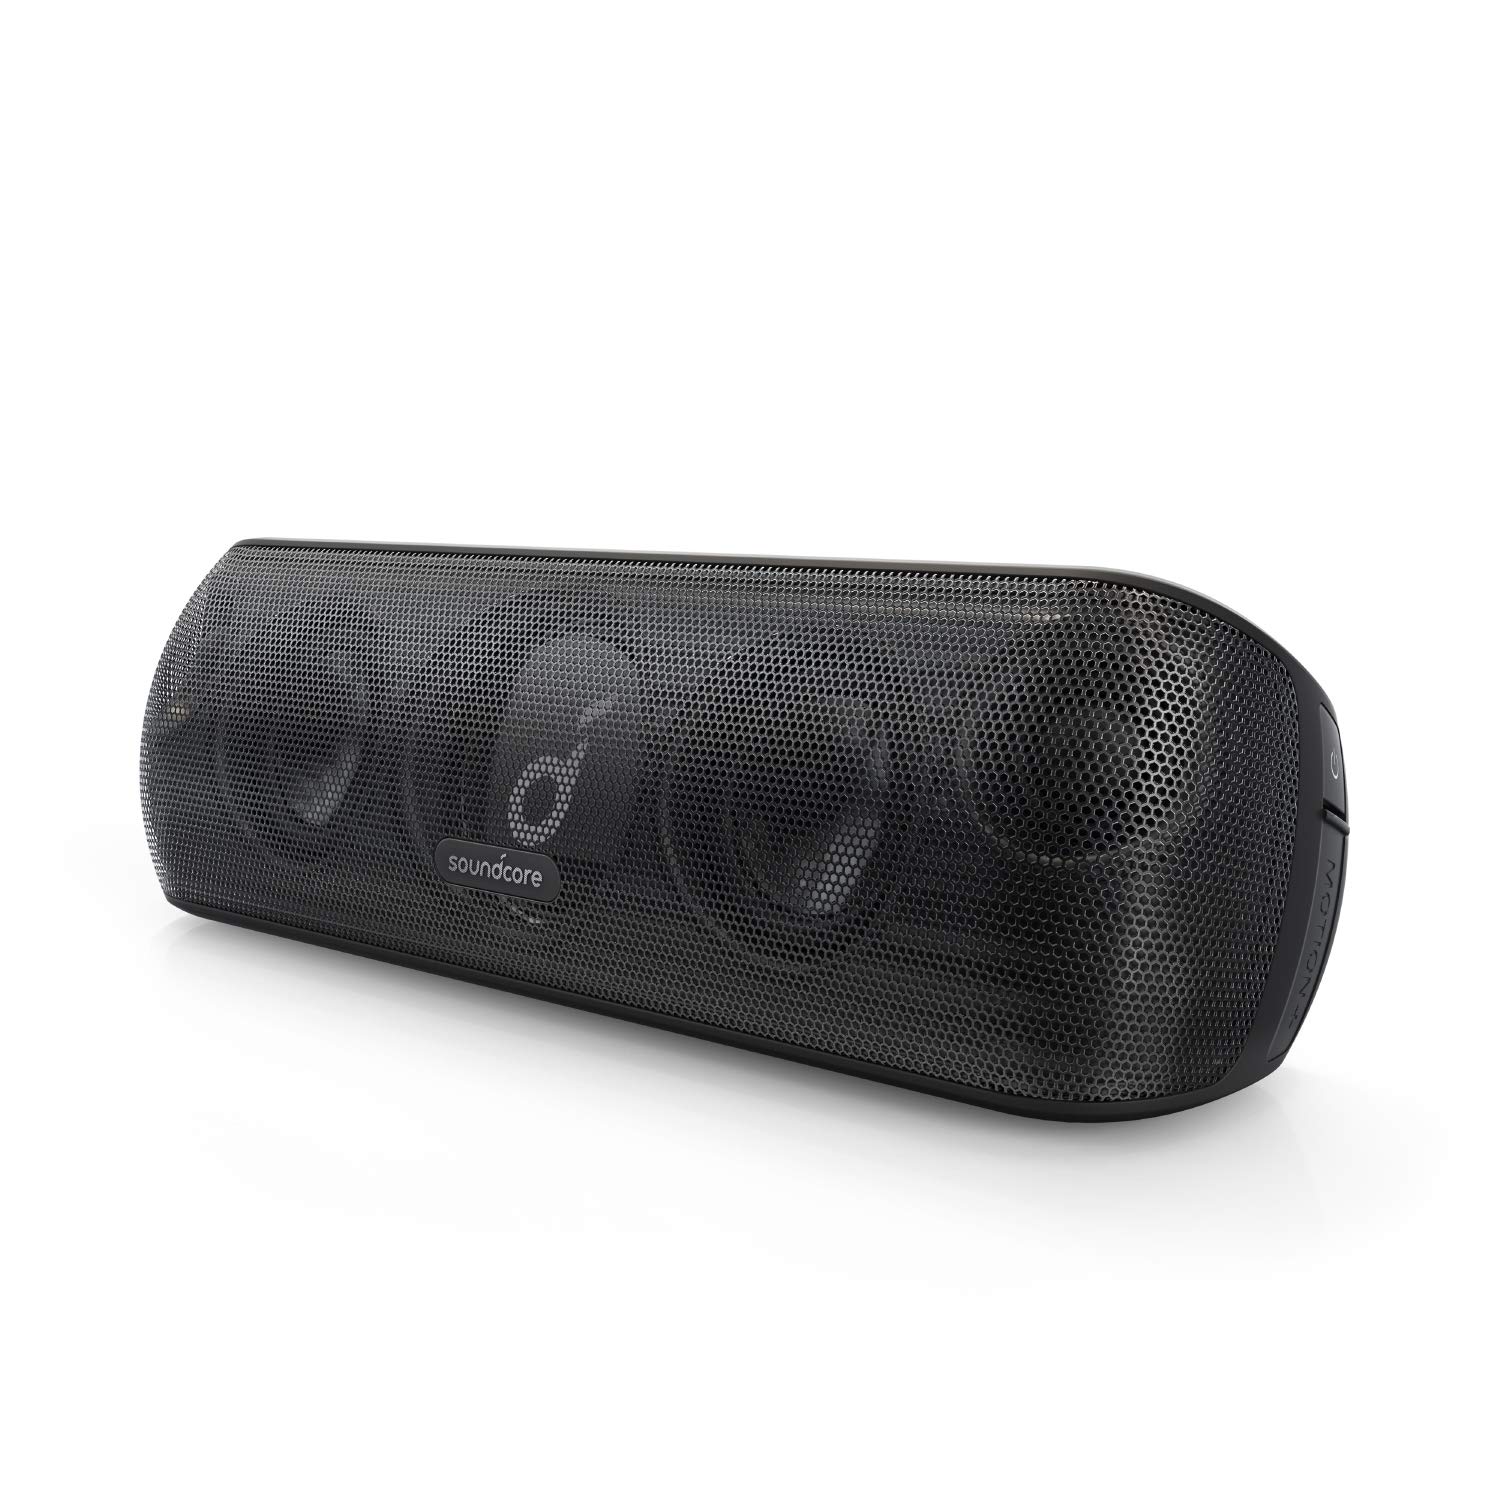 Anker、防水Bluetoothスピーカー｢Soundcore Motion+｣を発売 − 200個限定で2,000円オフに